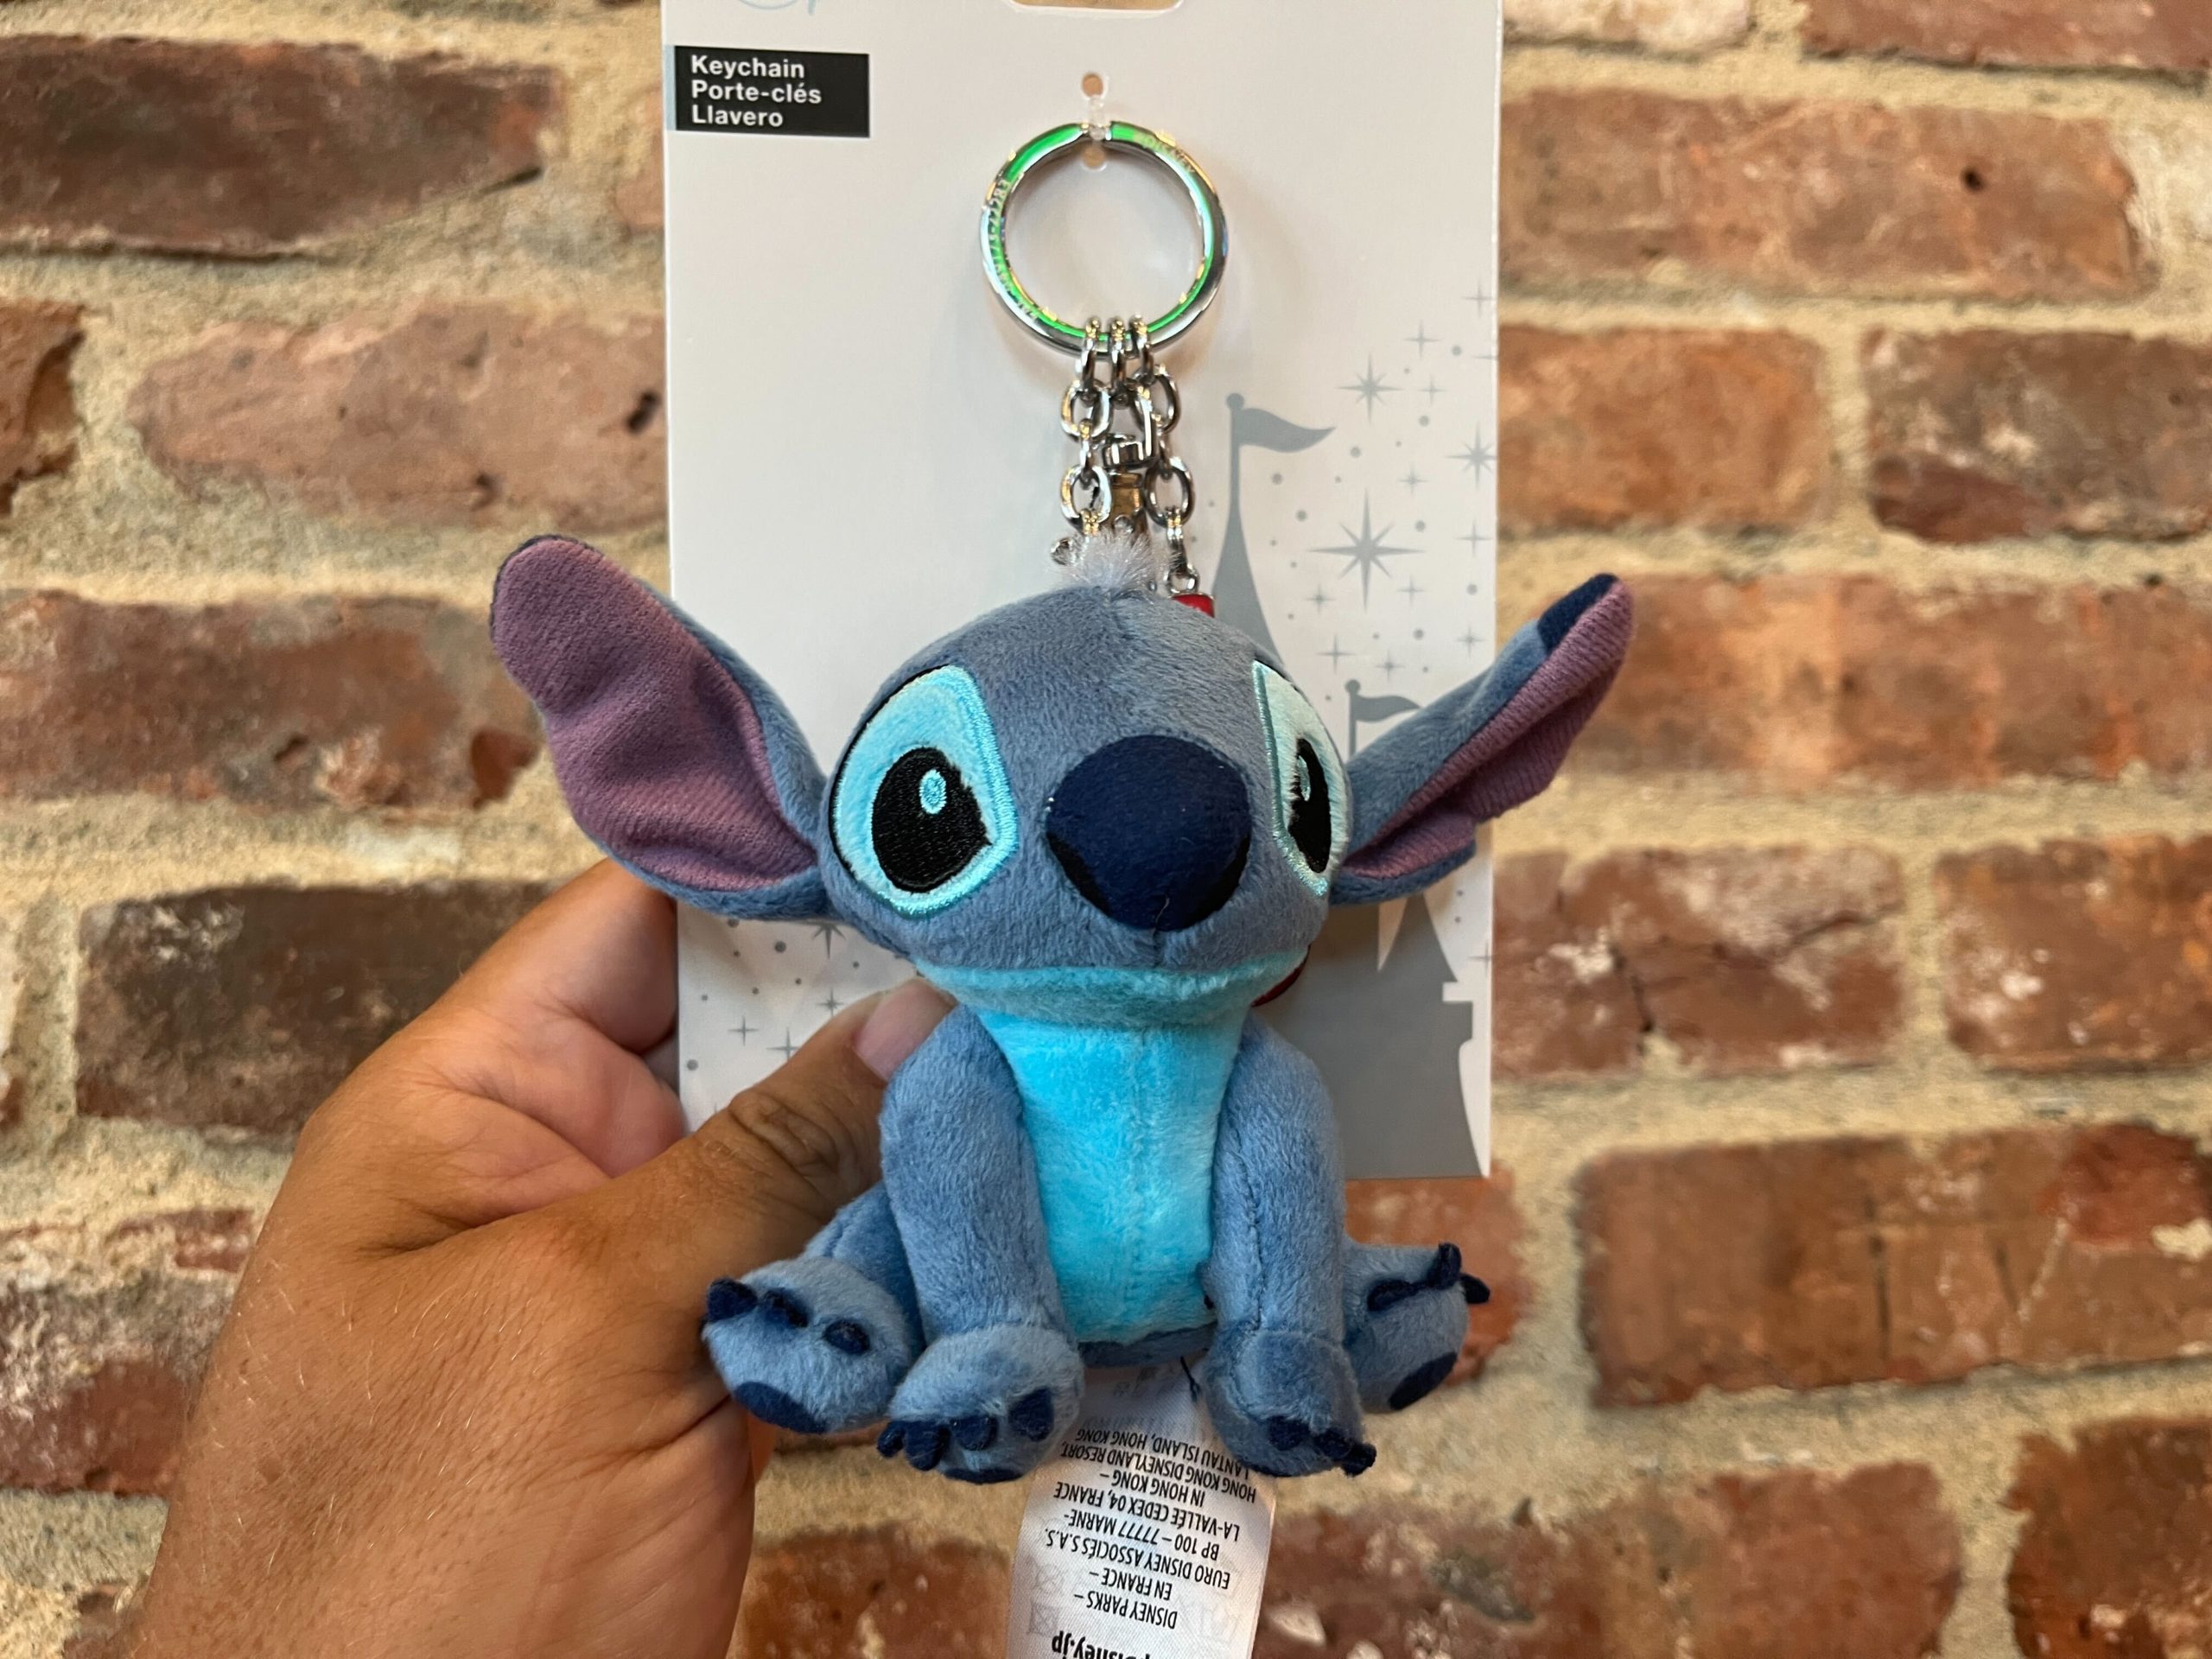 Disney Keychain - Stitch Plush